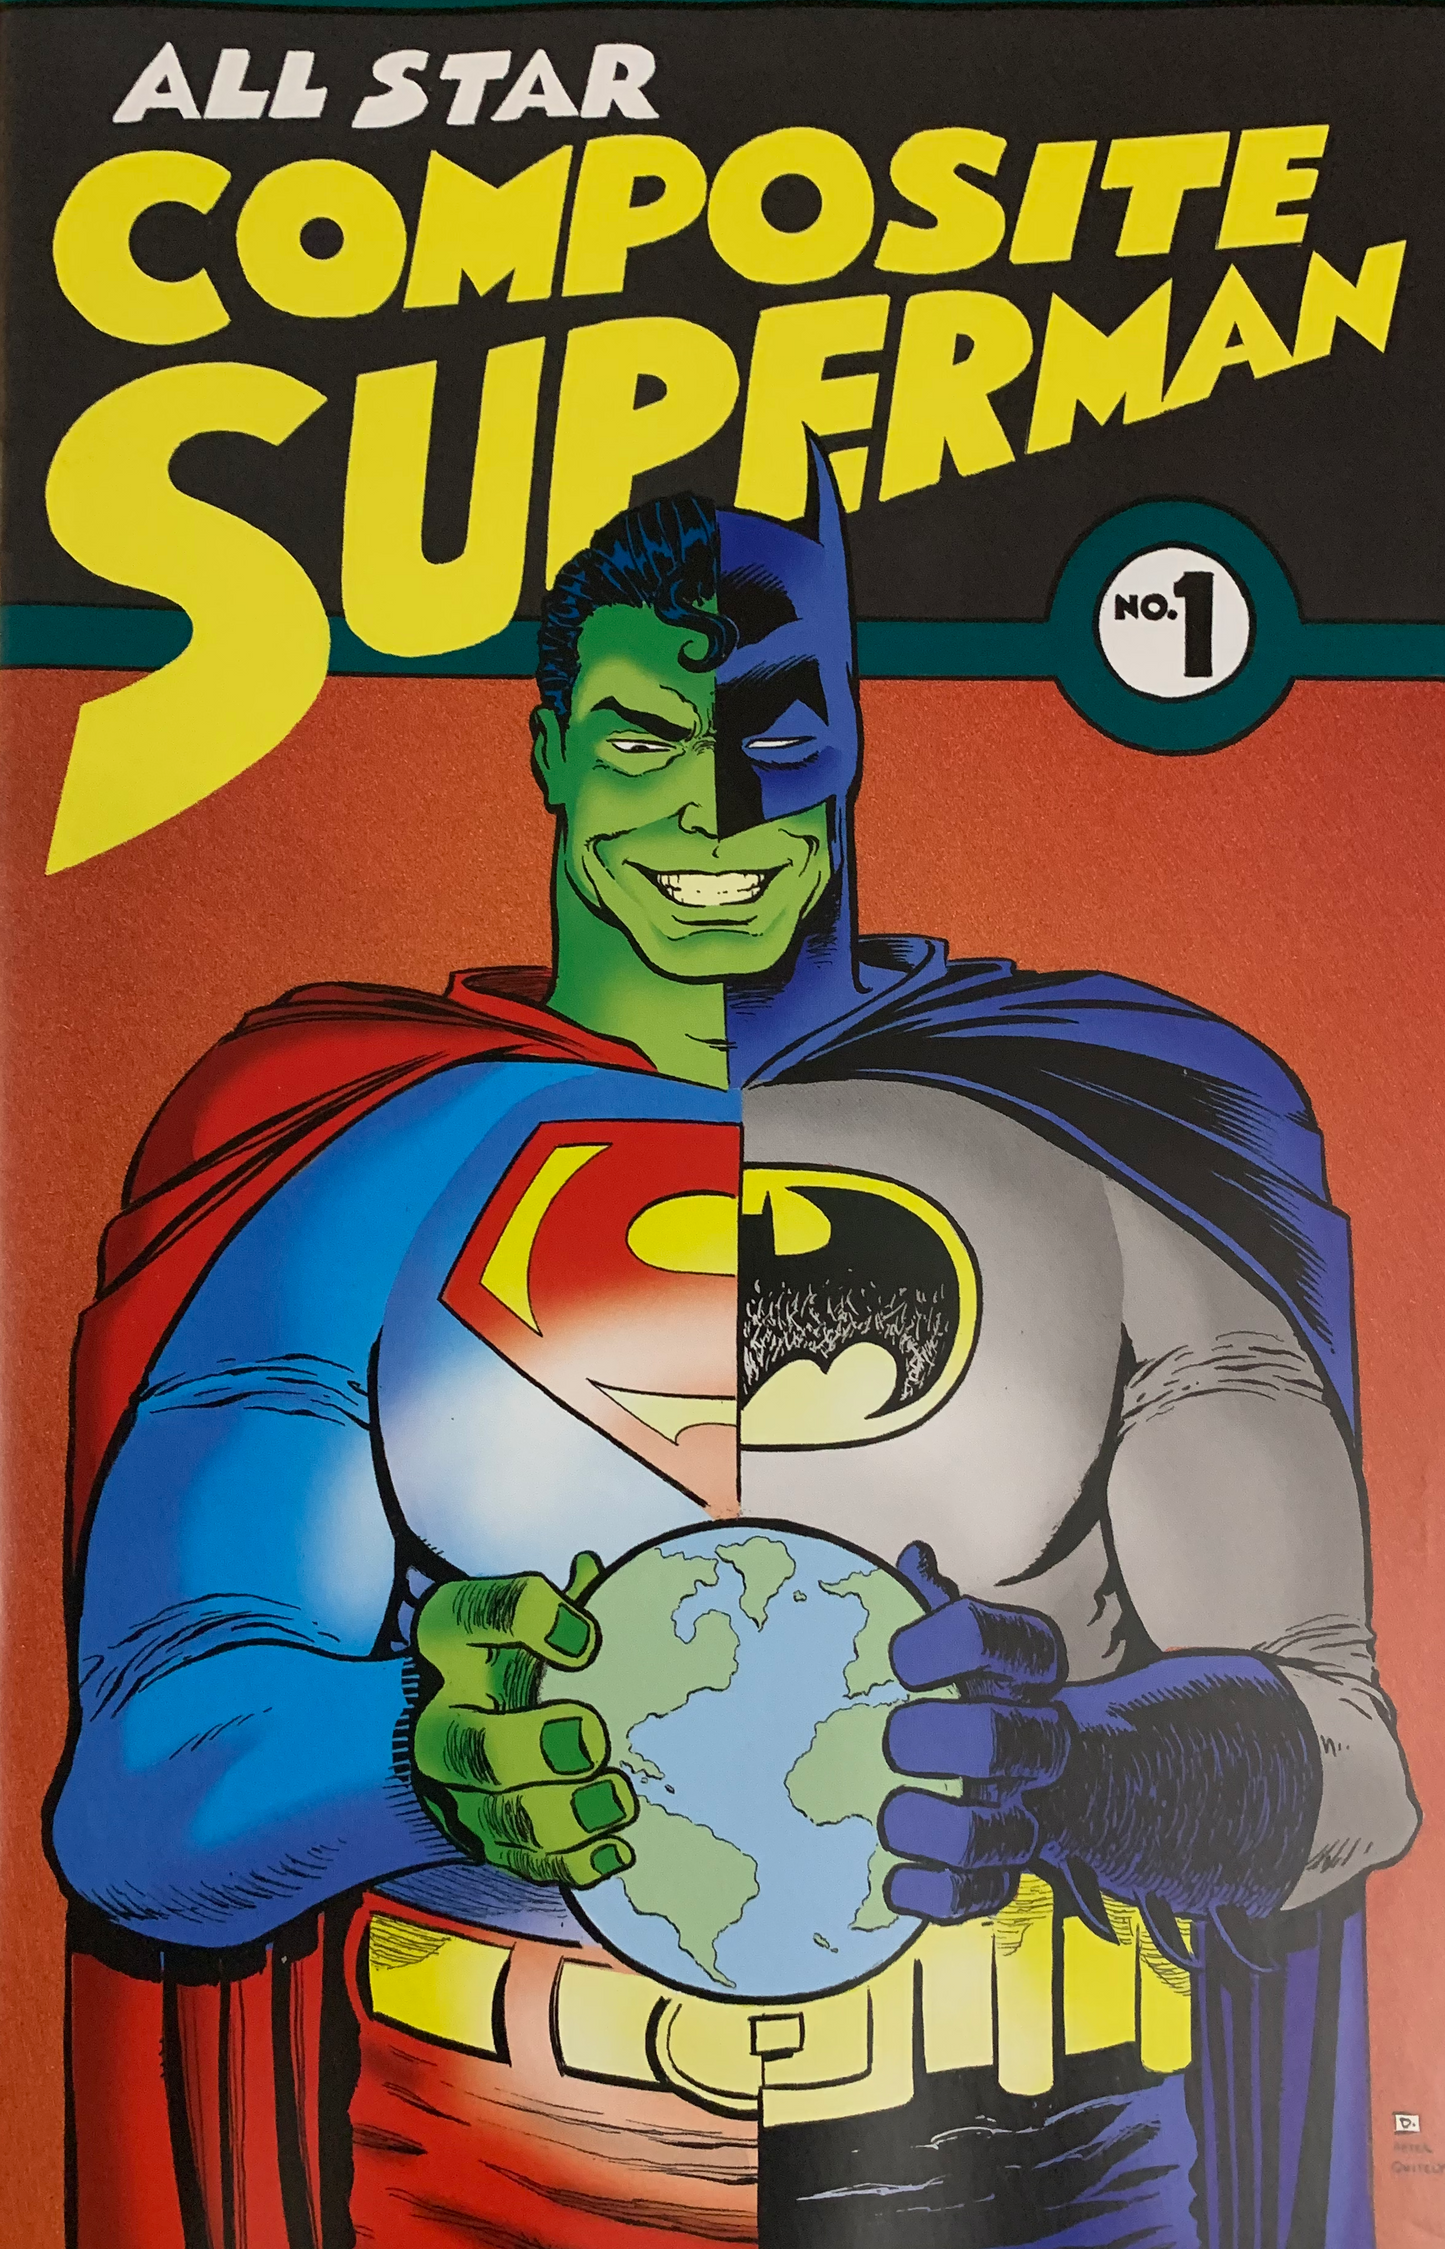 All Star Composite Superman #1